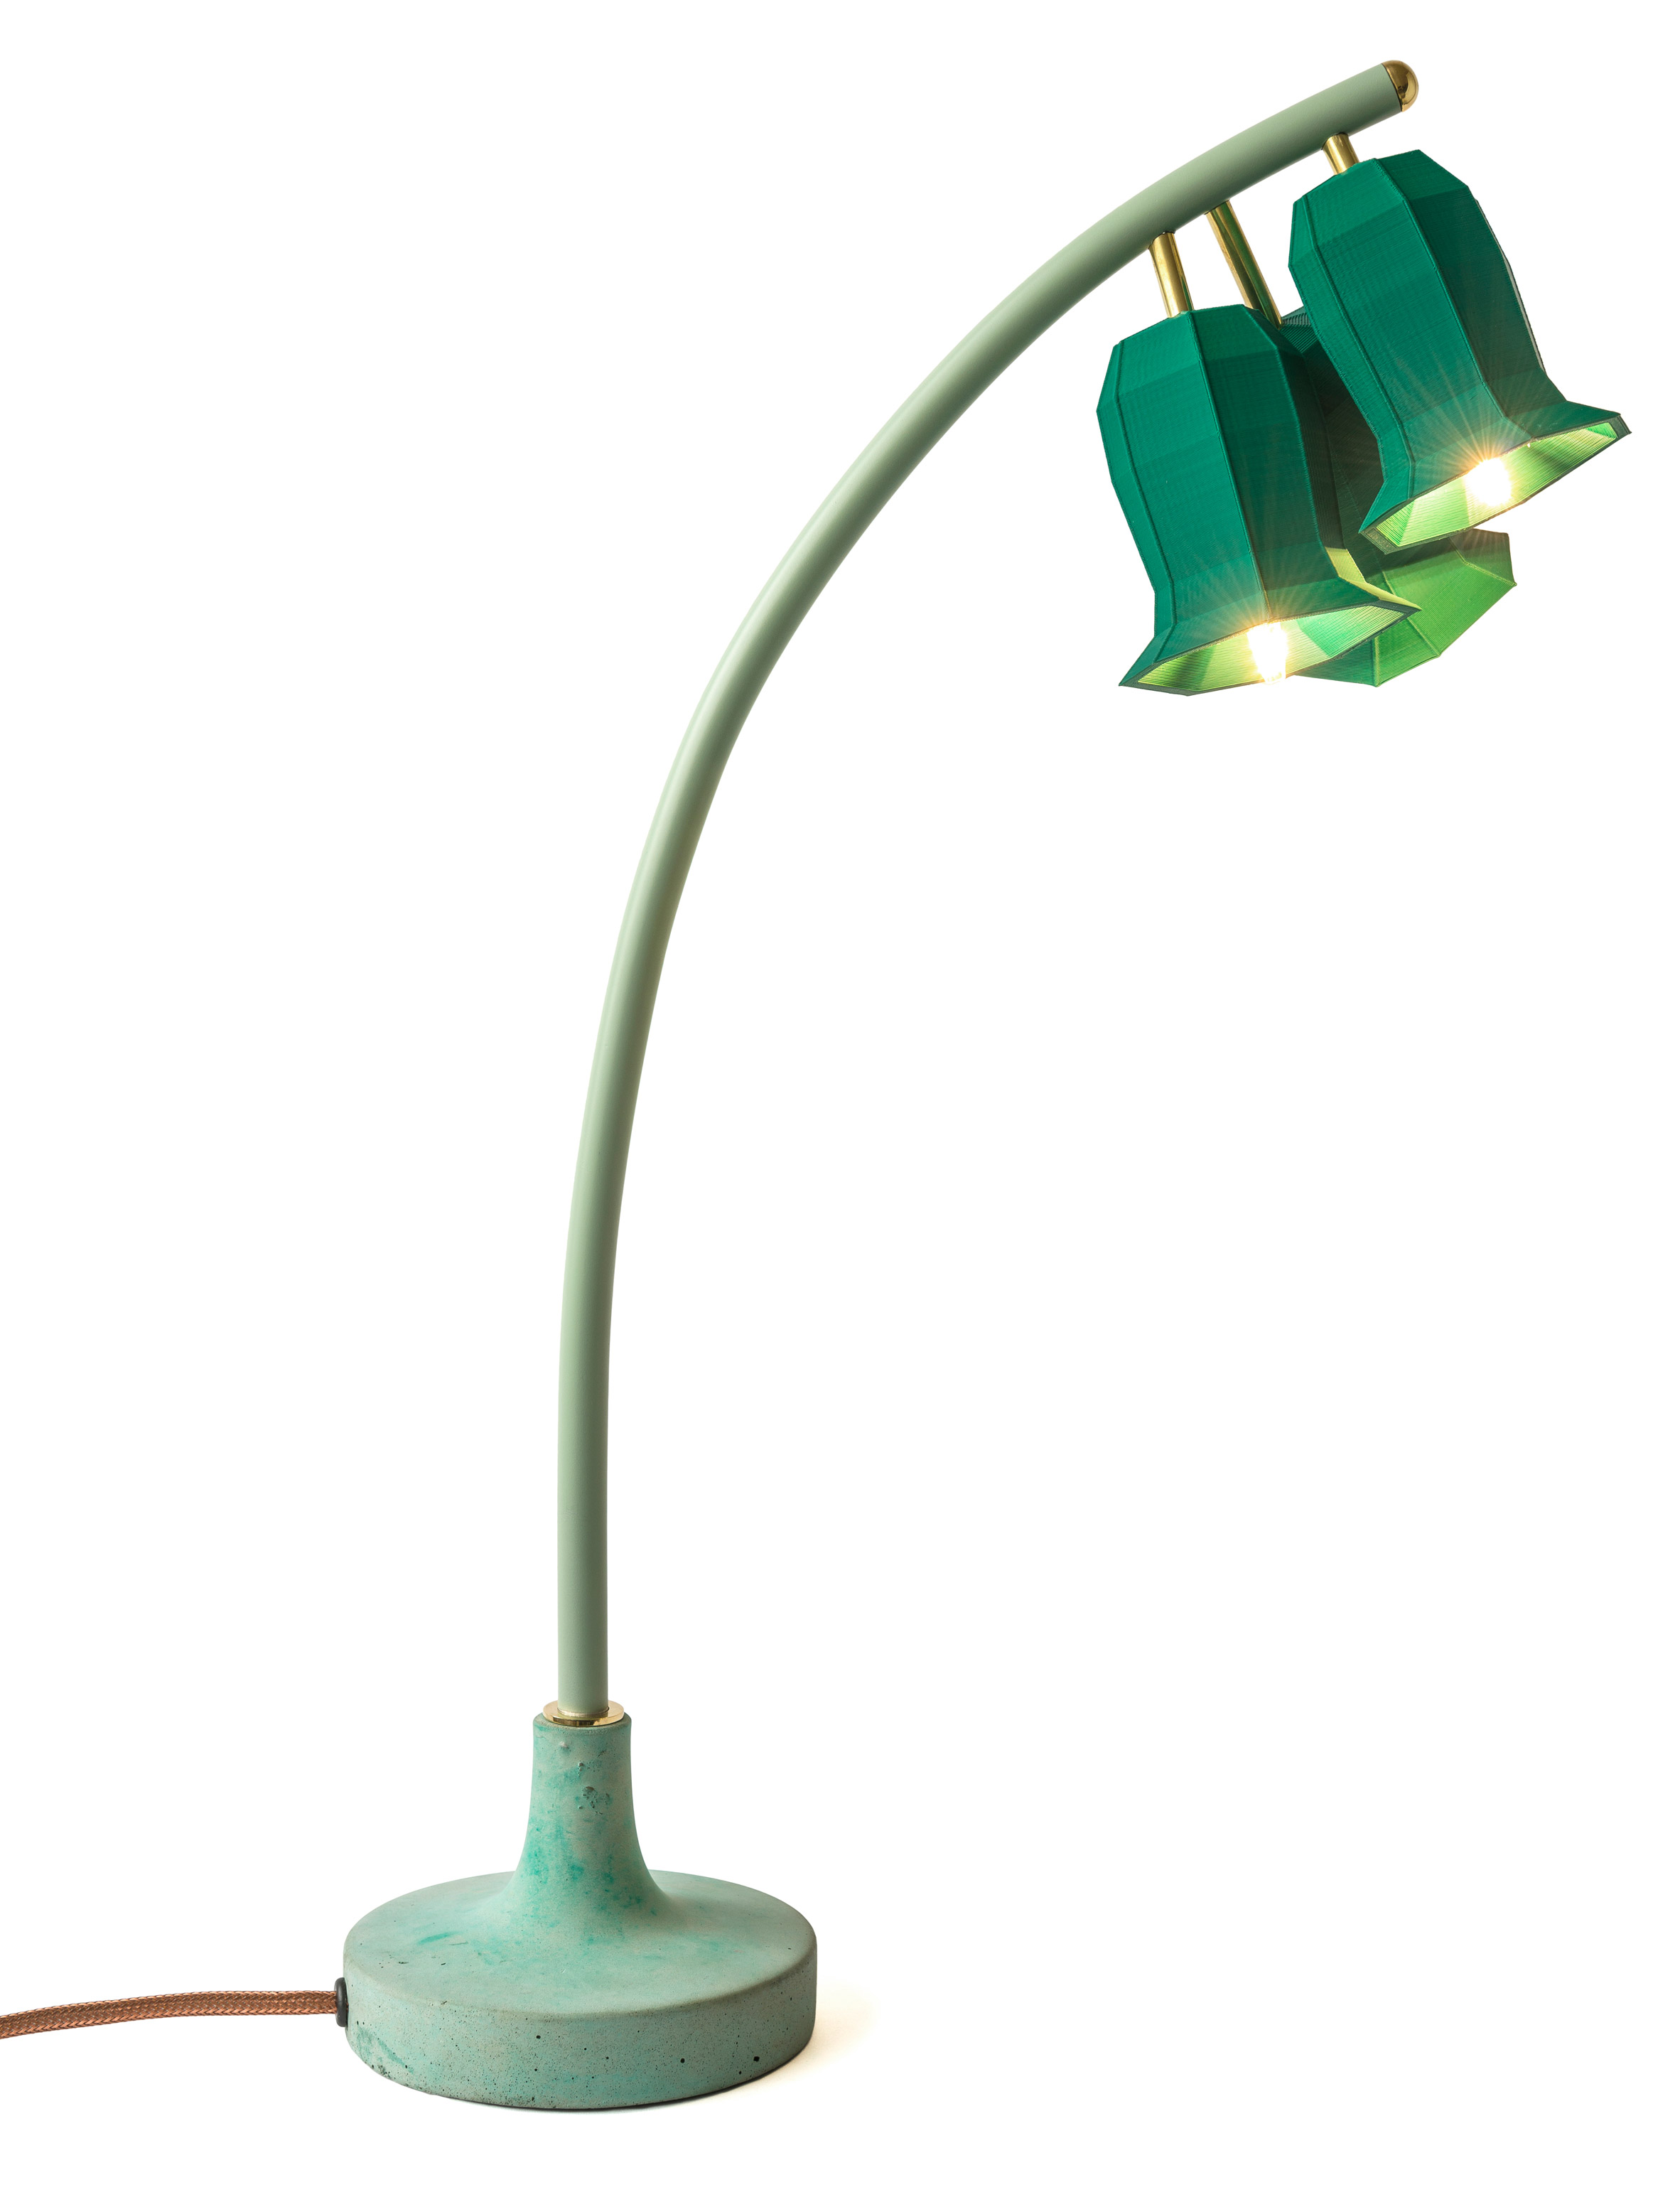 Plant lamps by Kiki van Eijk at Dutch Design Week